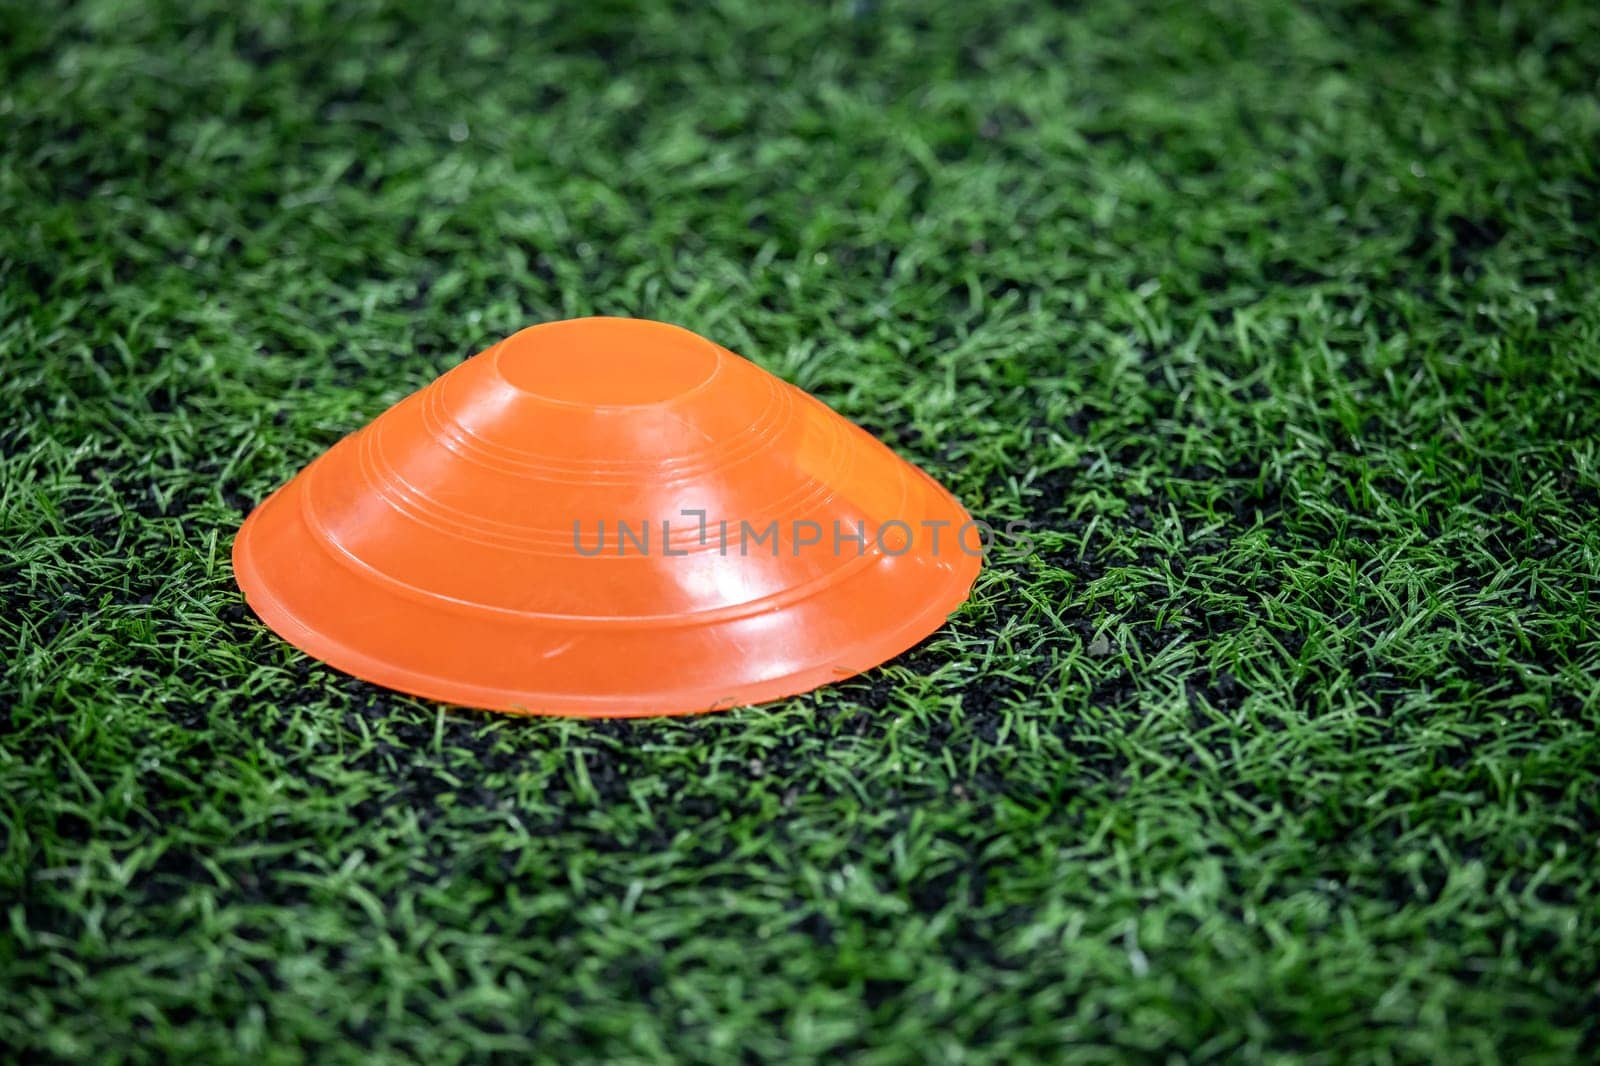 a pyramidal orange football cone on a green artificial turf. by bySergPo